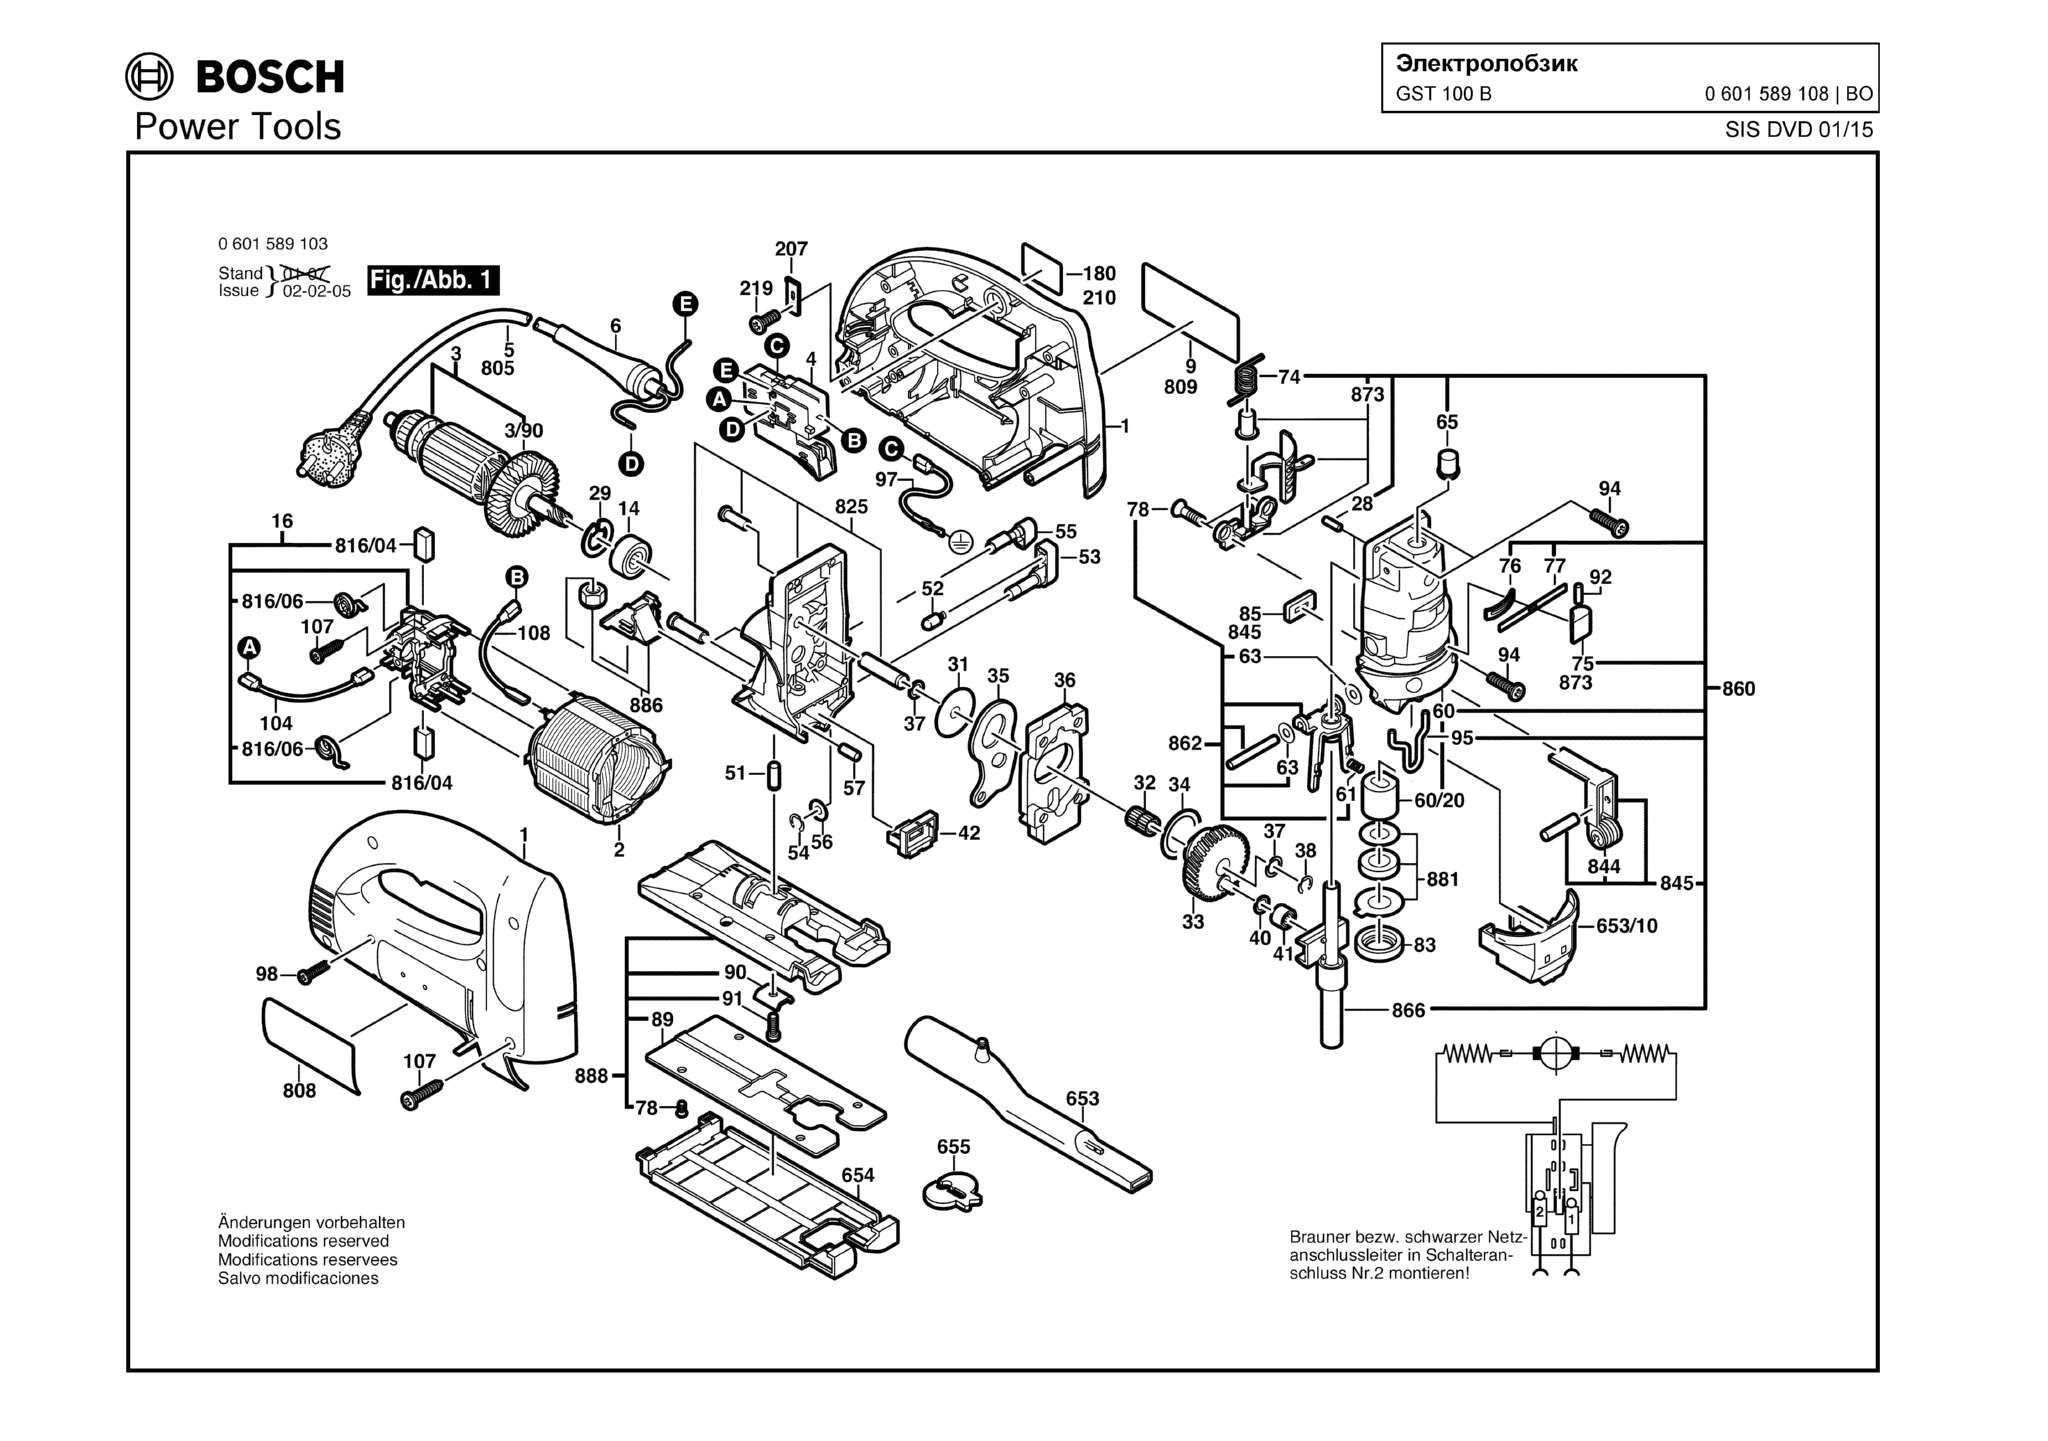 Запчасти, схема и деталировка Bosch GST 100 B (ТИП 0601589108)